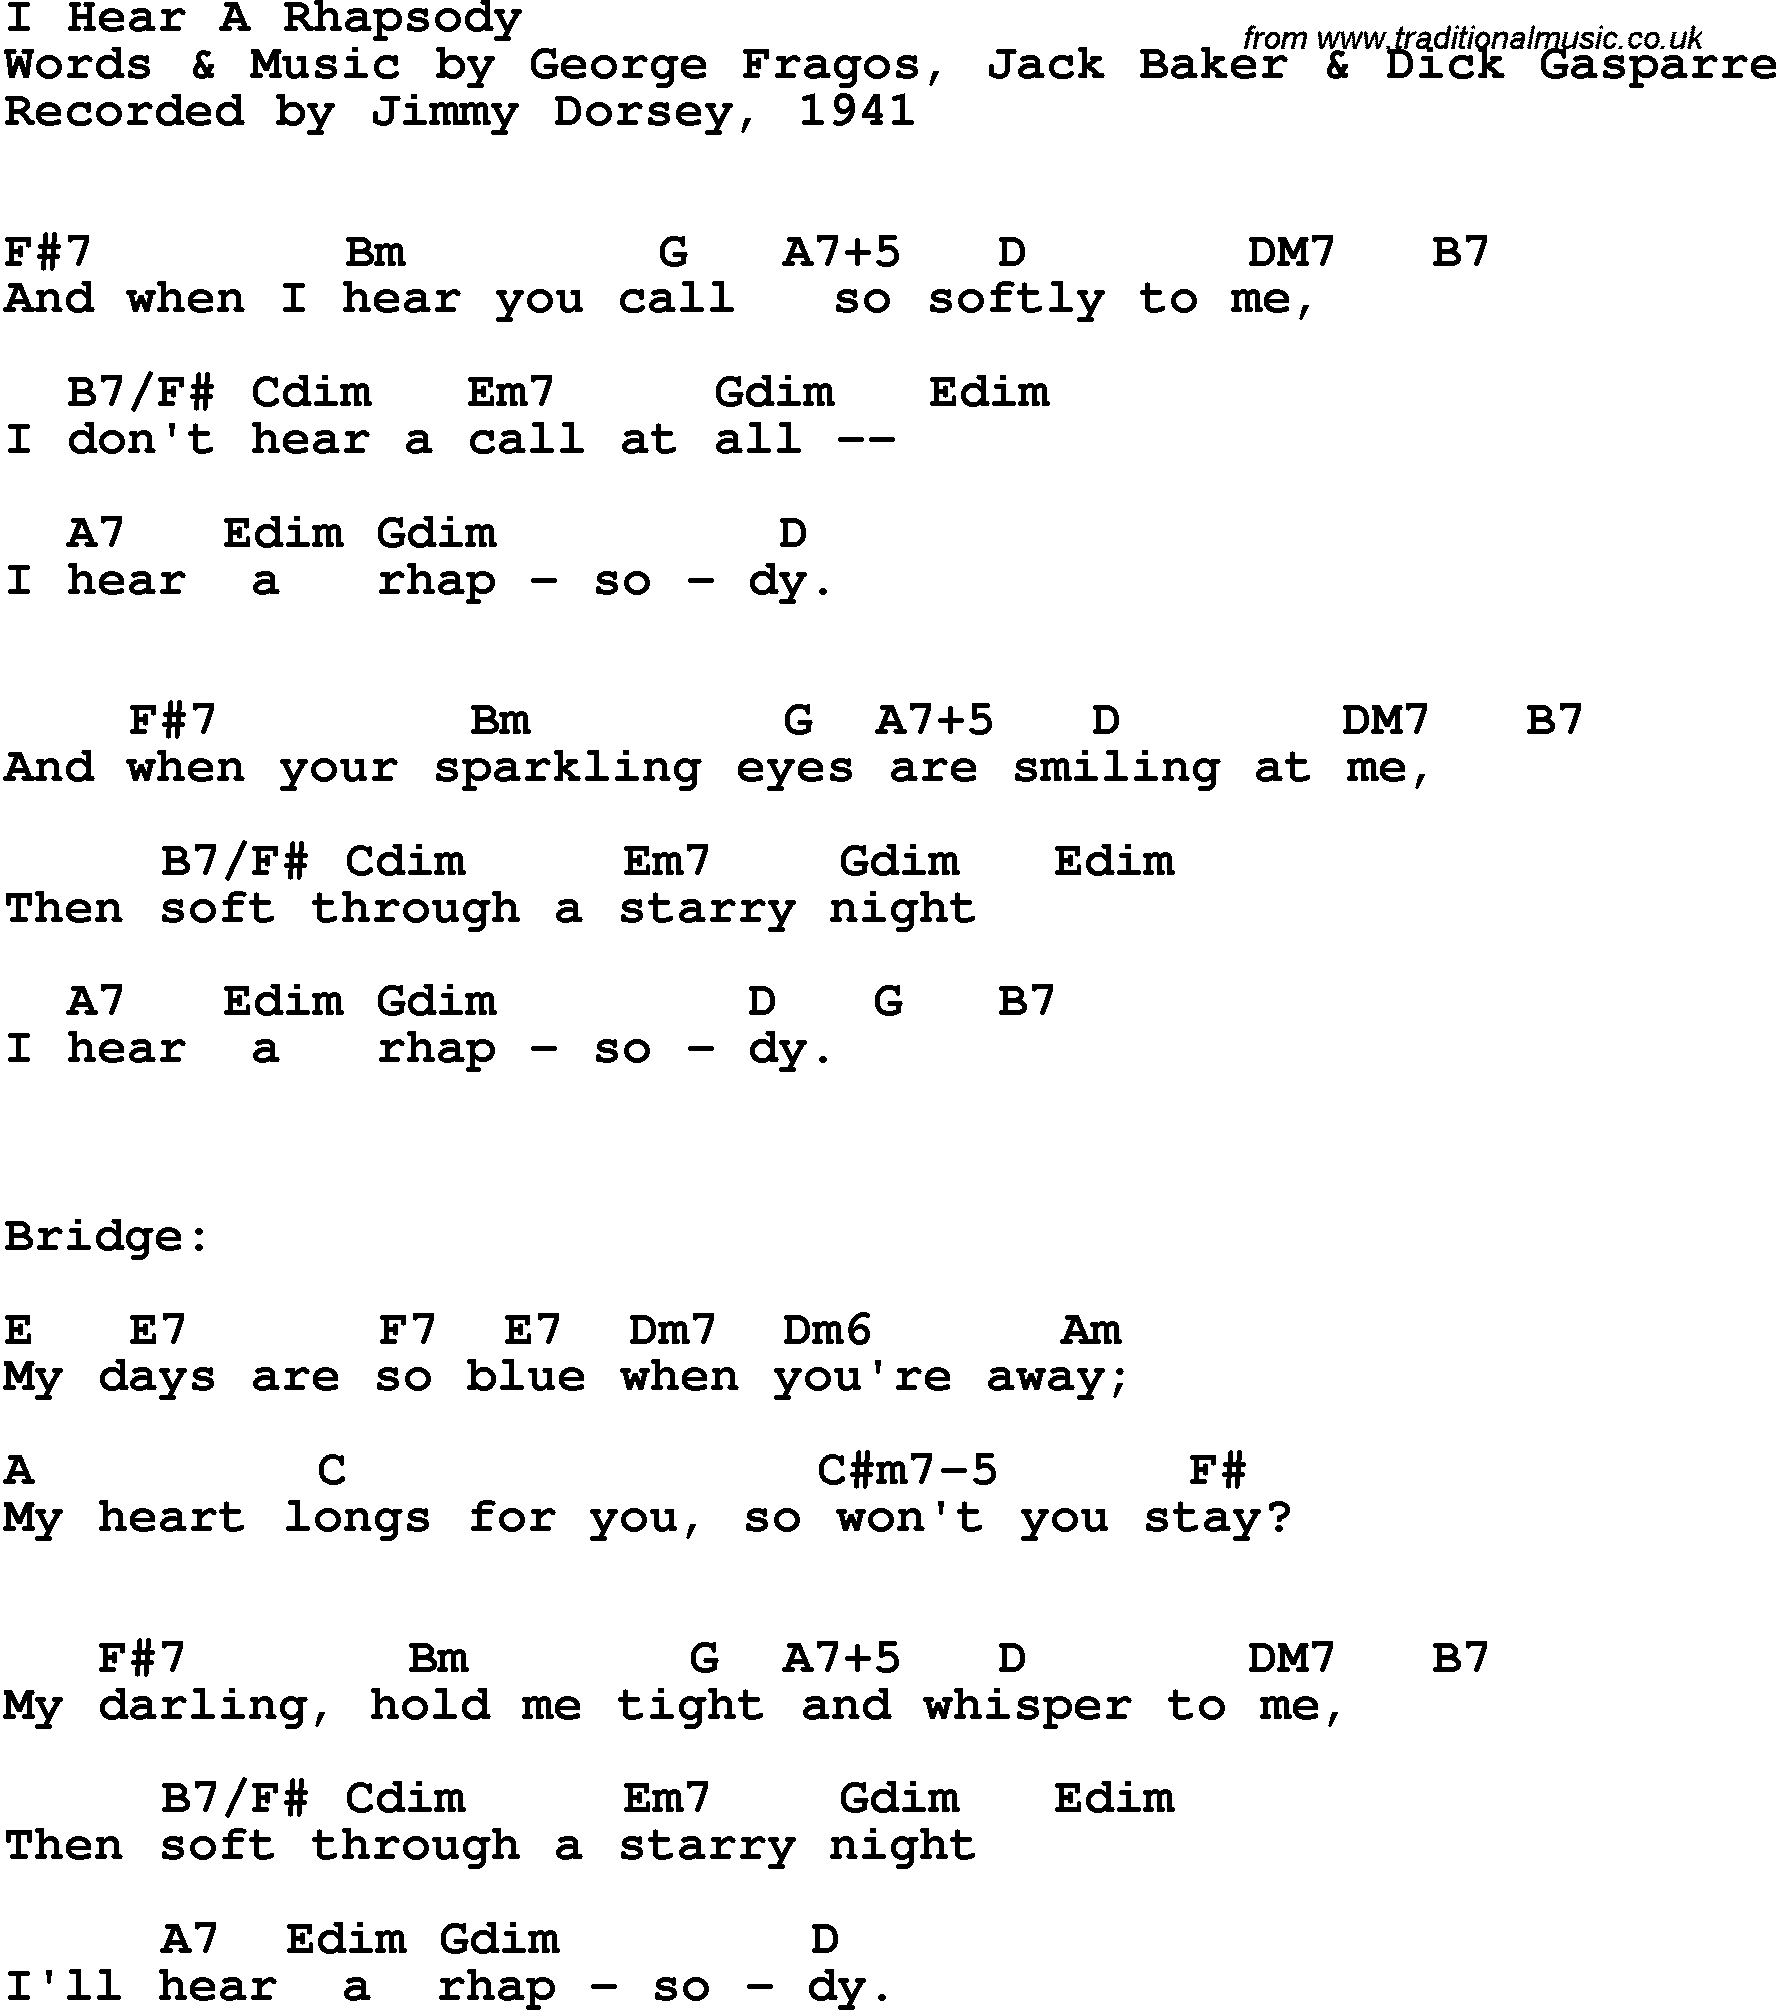 Song Lyrics with guitar chords for I Hear A Rhapsody - Jimmy Dorsey, 1941